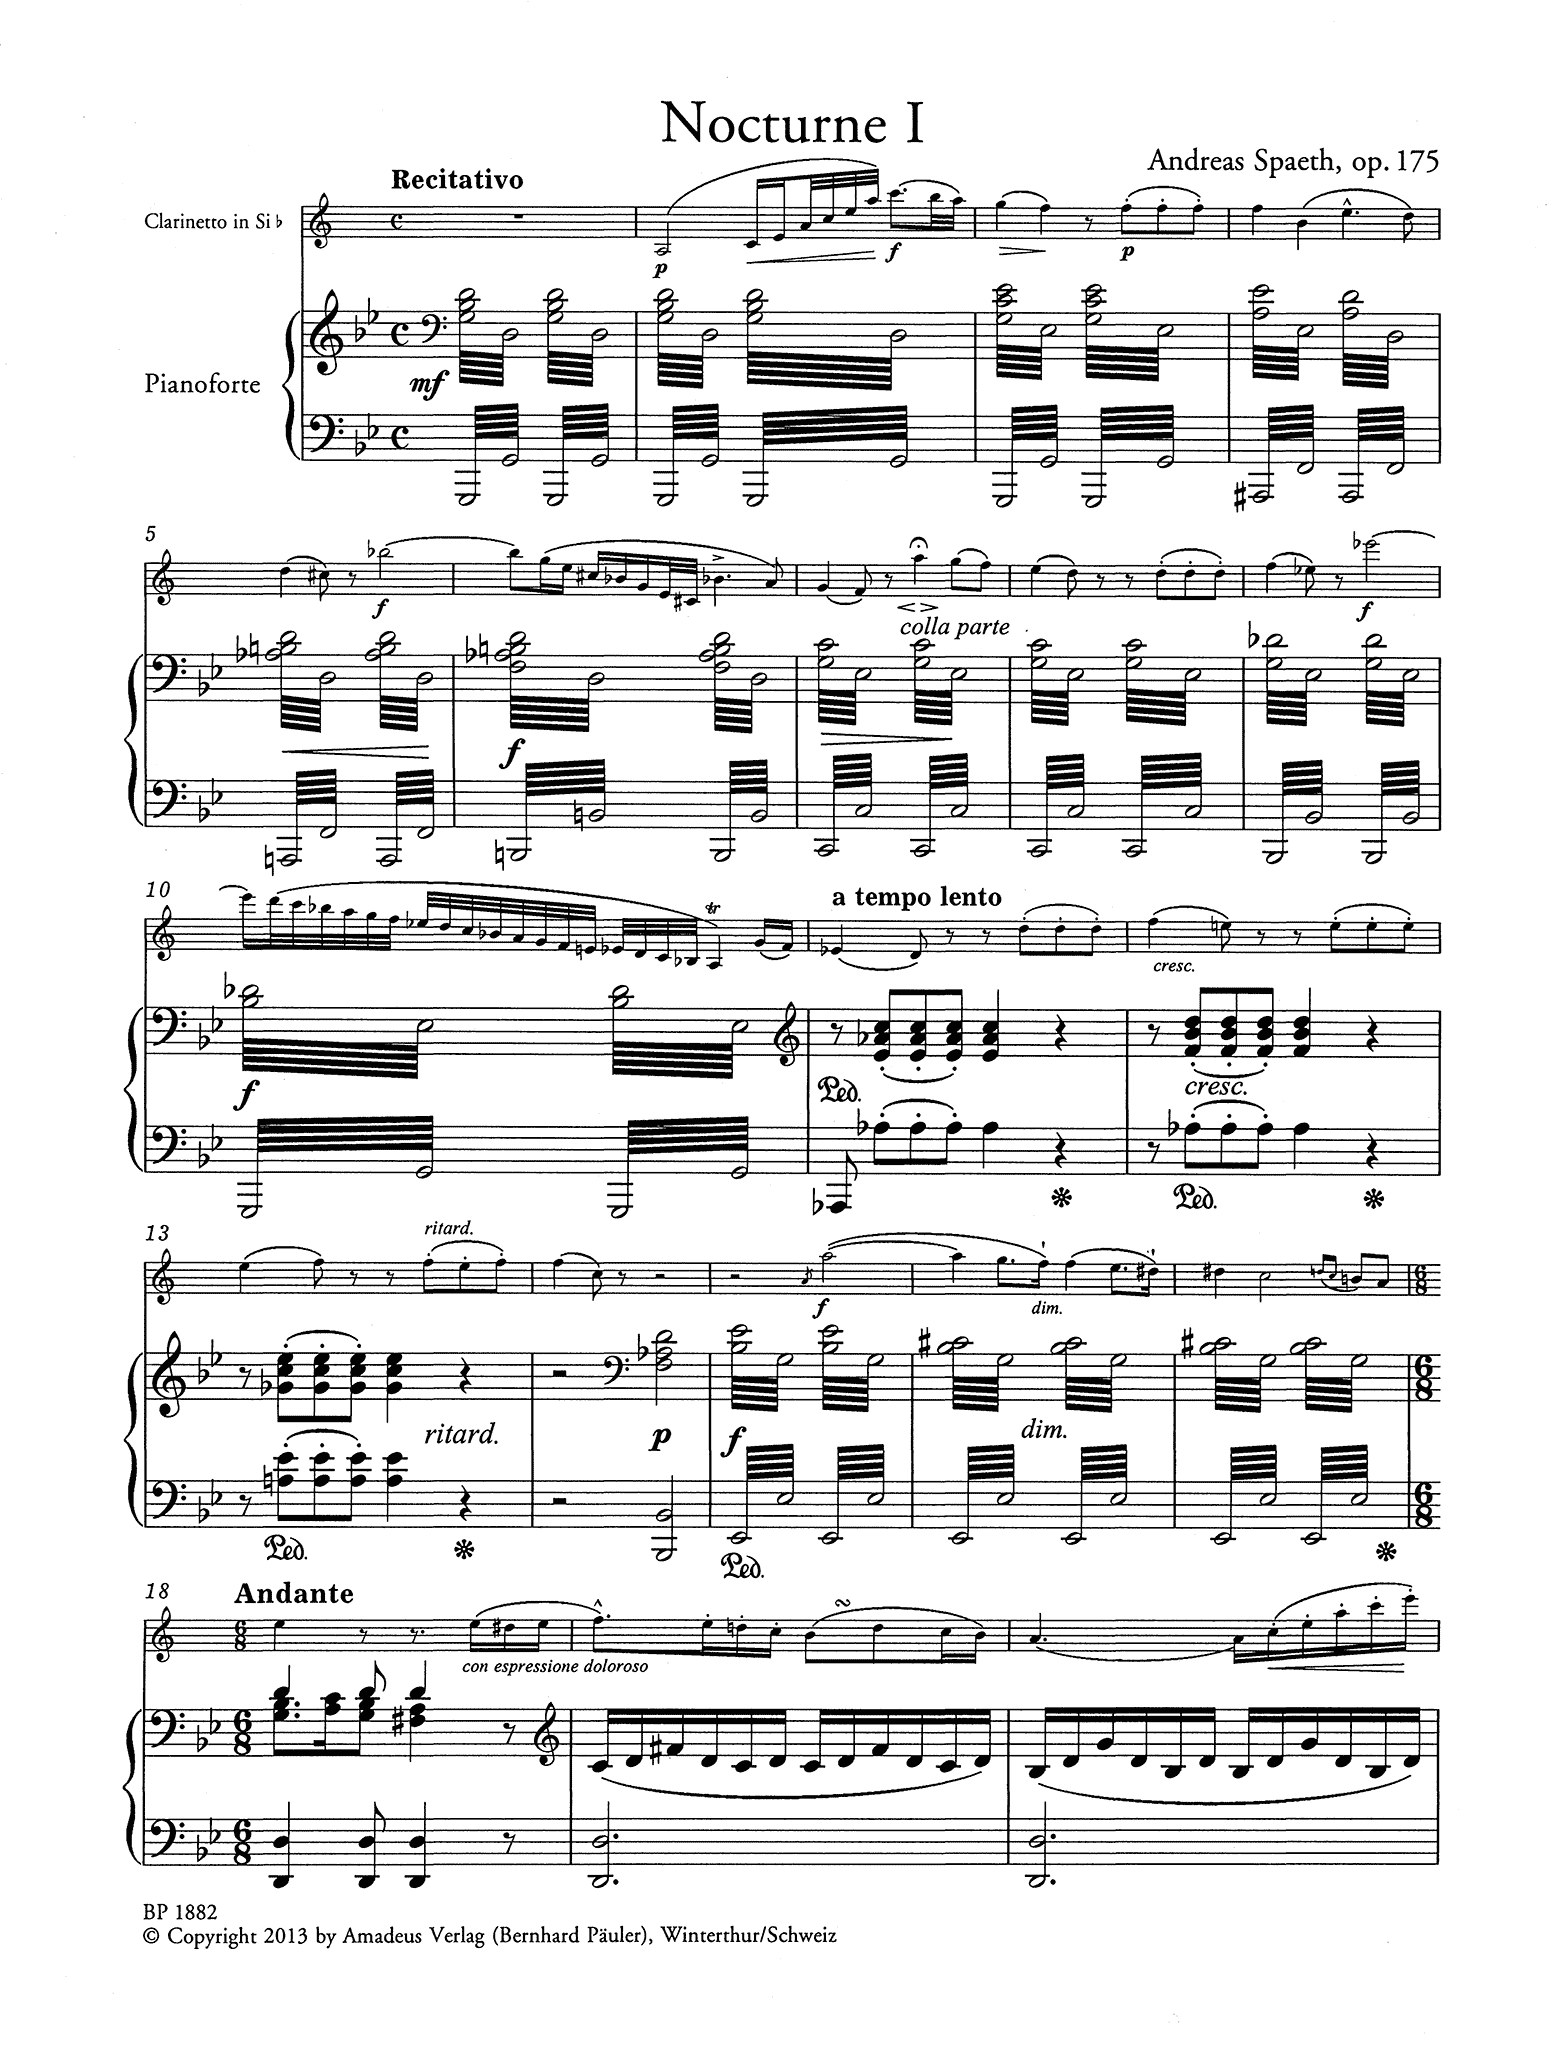 Späth, Andreas_Three Nocturnes, Op. 175 - Movement 1